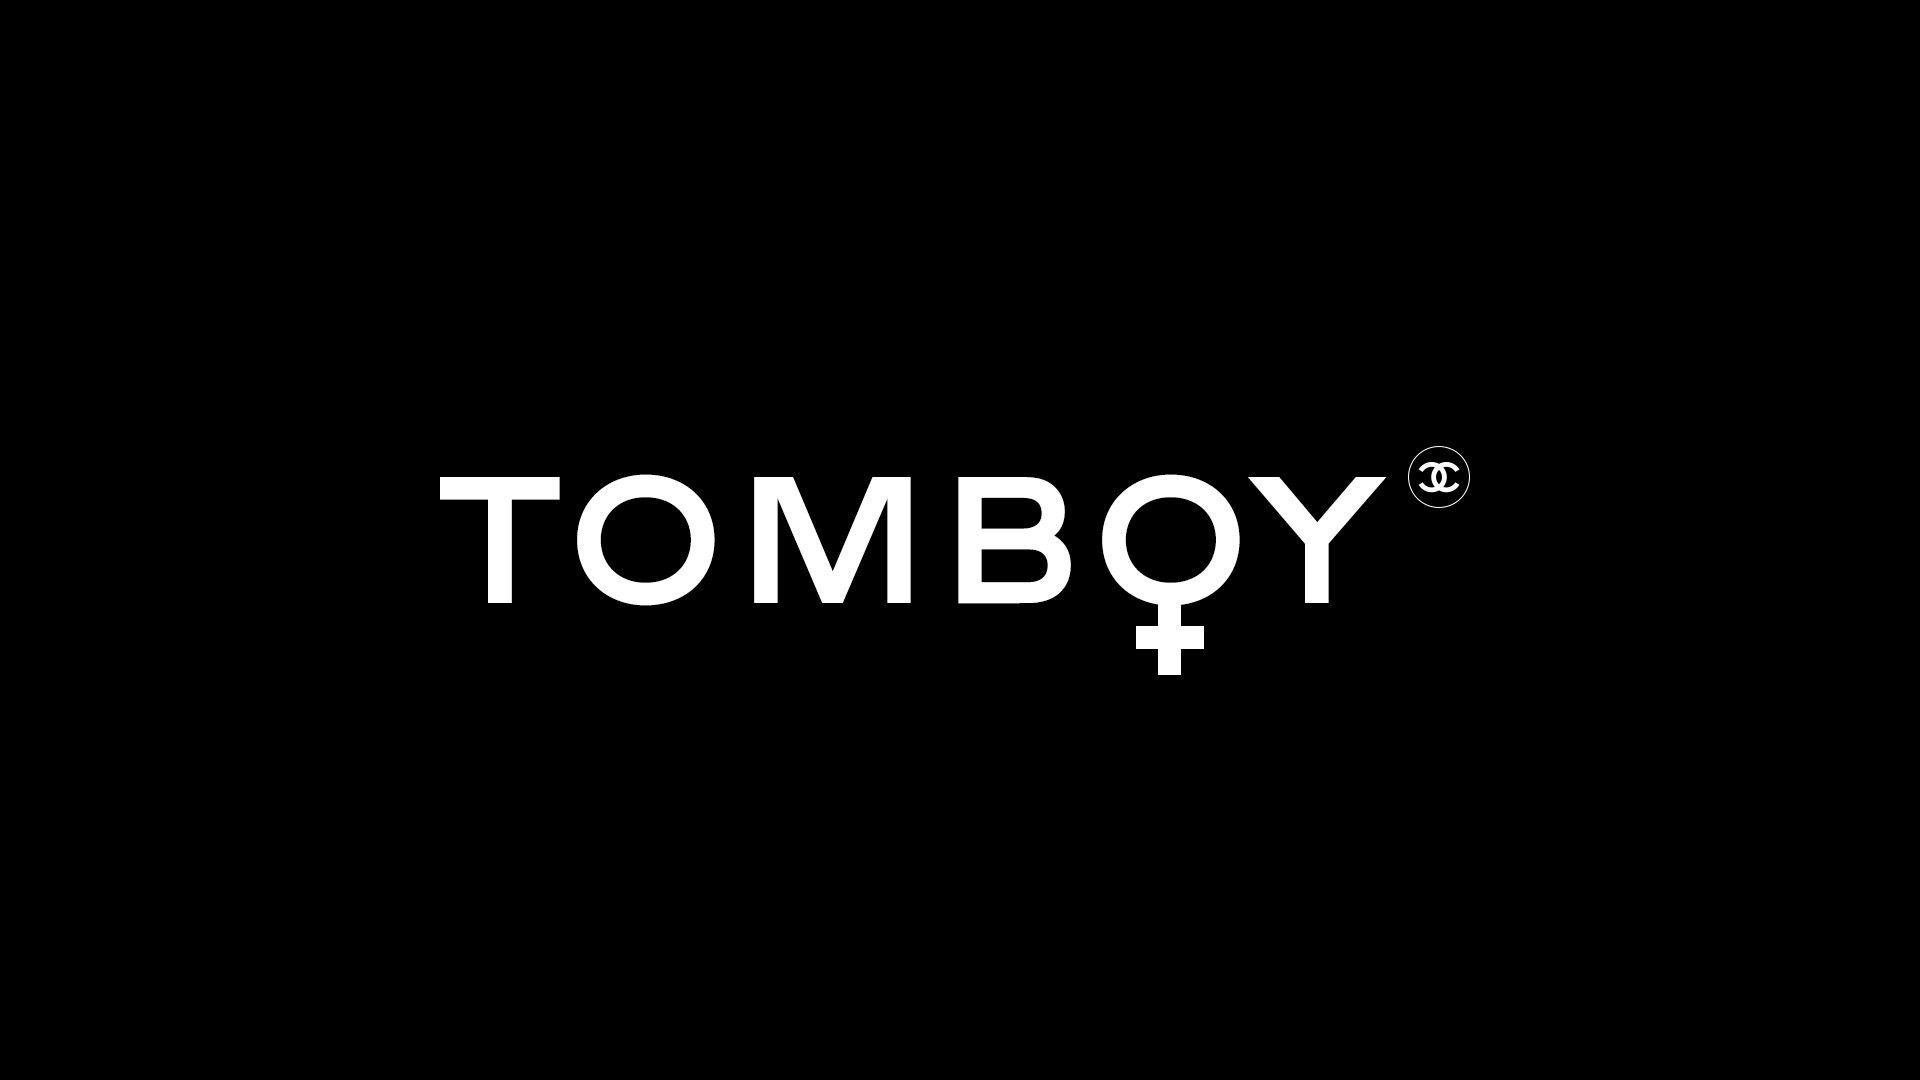 Tomboy Girl  WhatsApp DP, HD Images